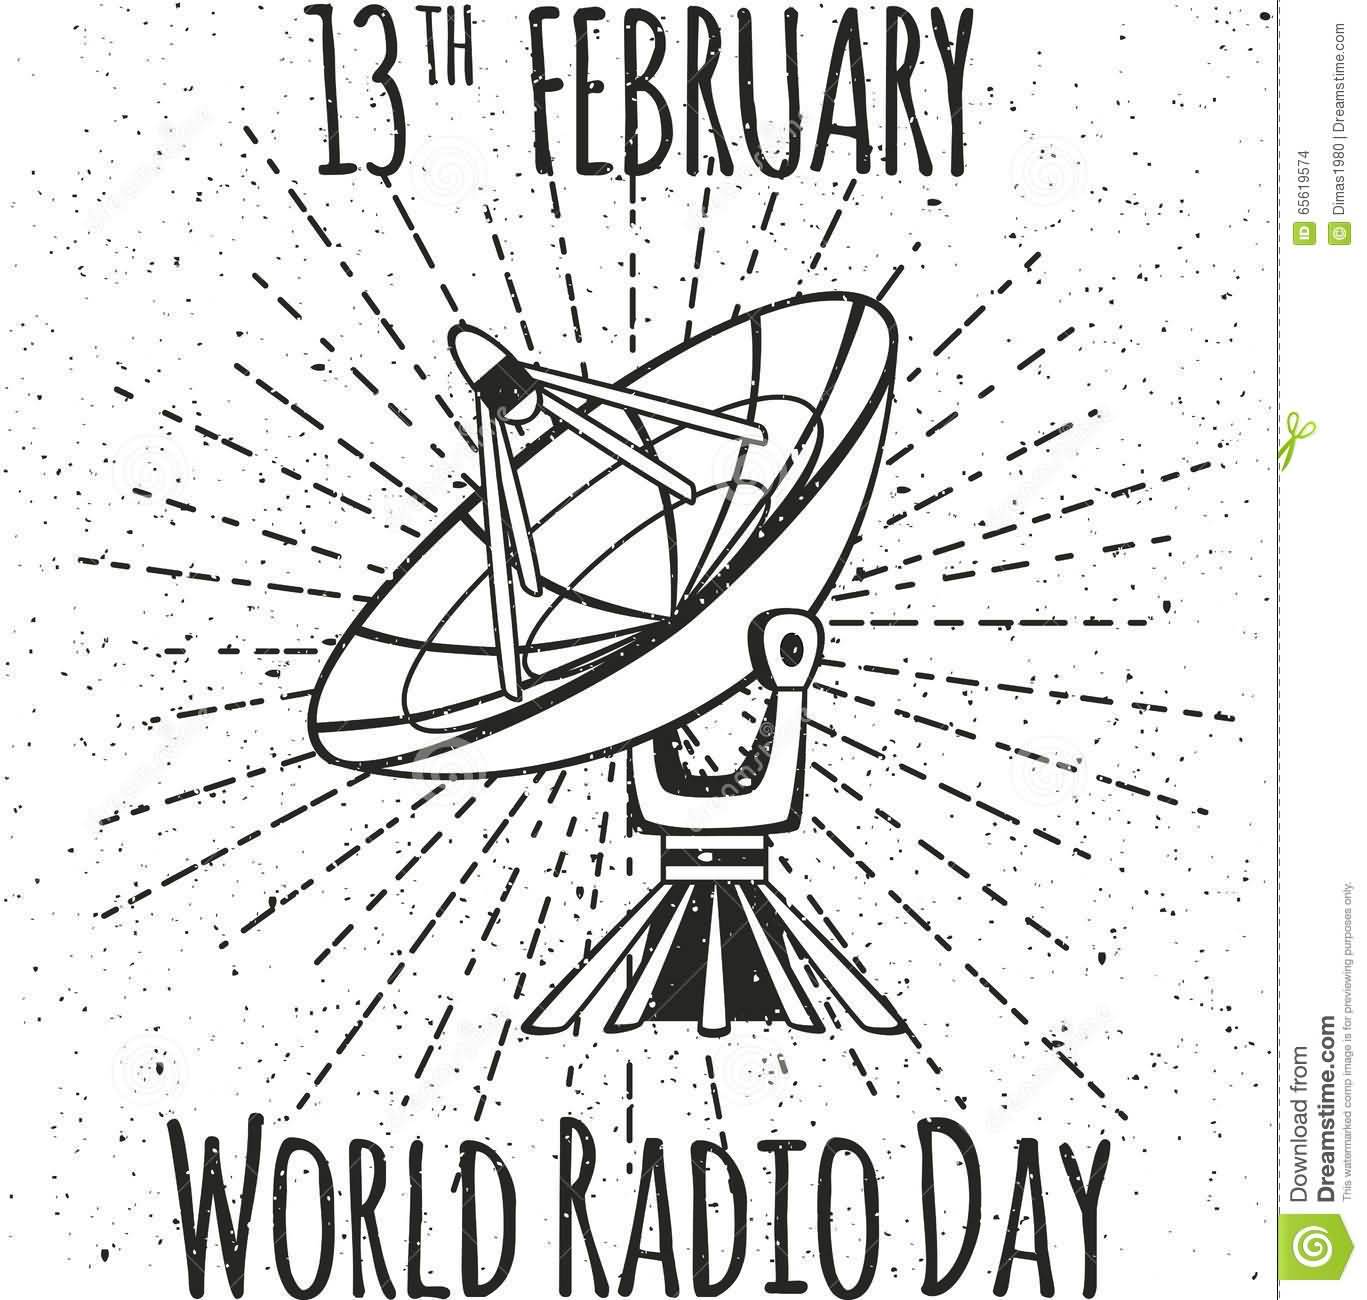 13th February World Radio Day